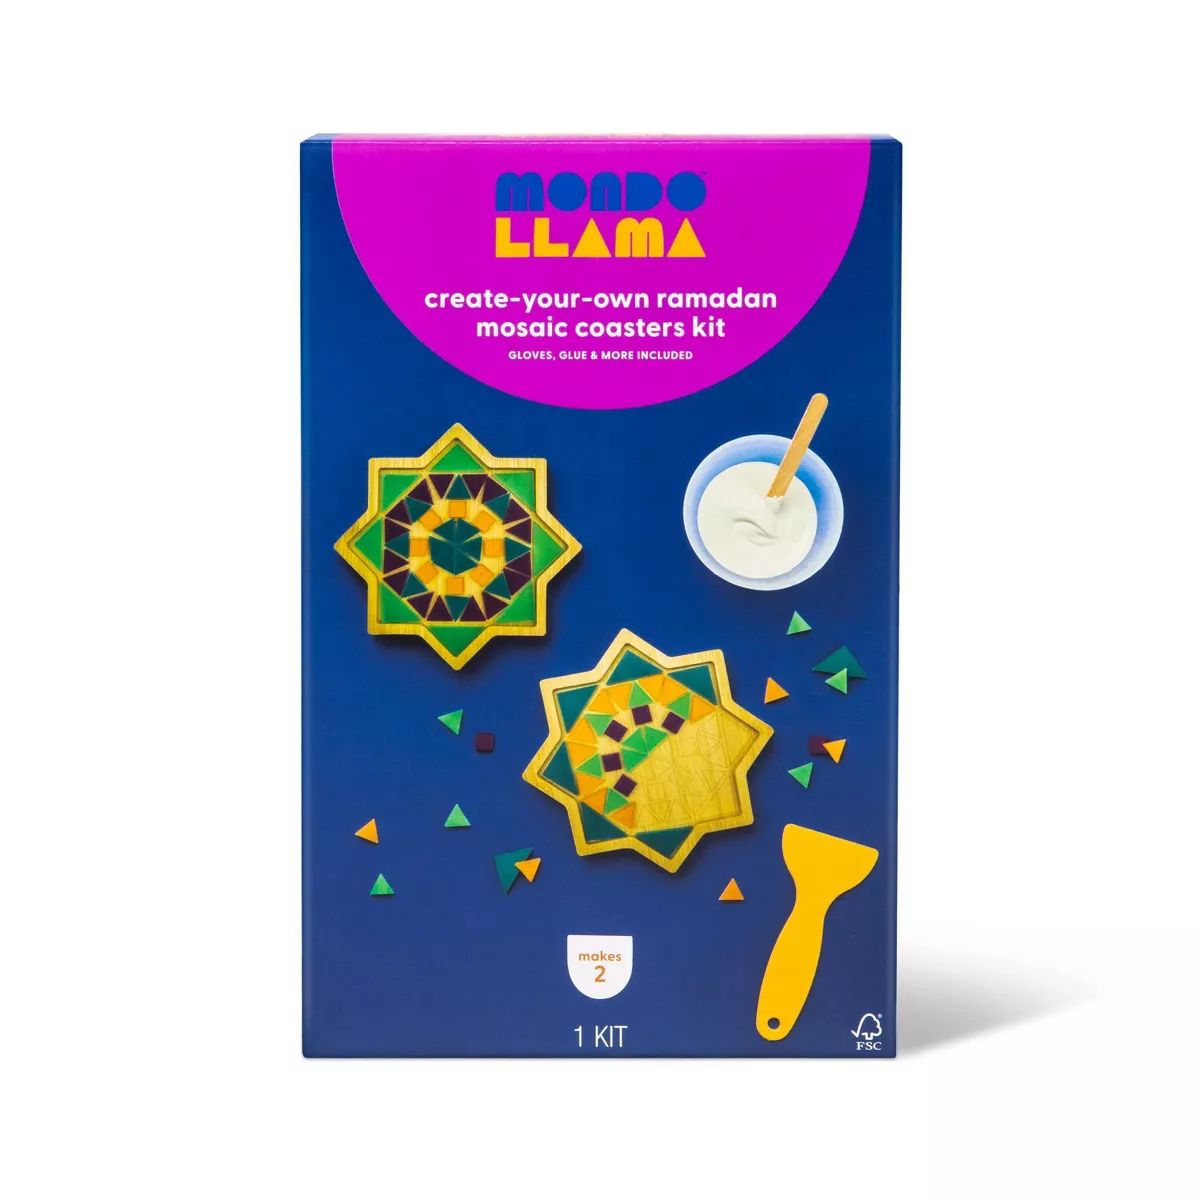 Make-Your-Own Ramadan Mosaic Coasters Kit - Mondo Llama™ | Target